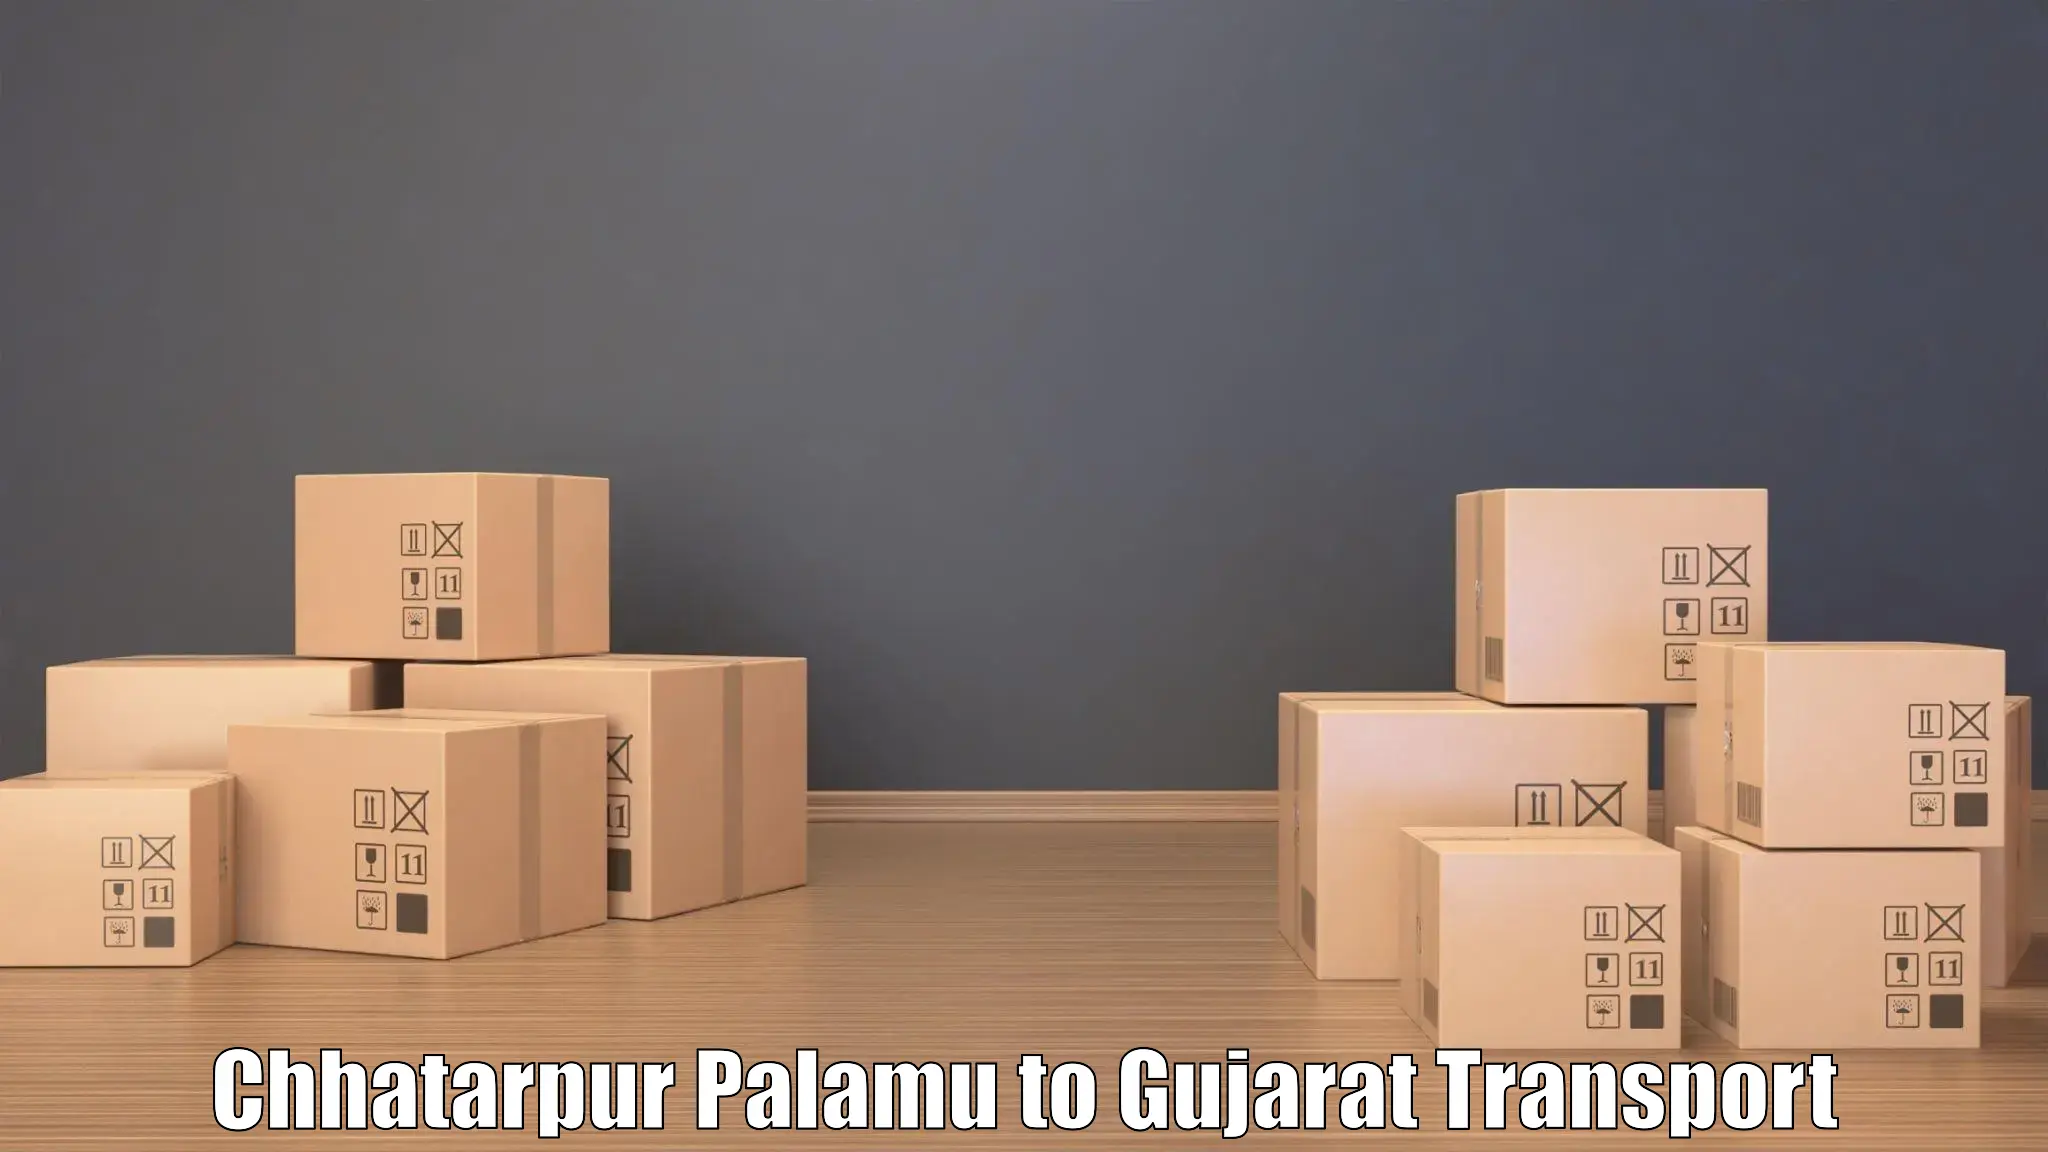 Delivery service Chhatarpur Palamu to Gujarat